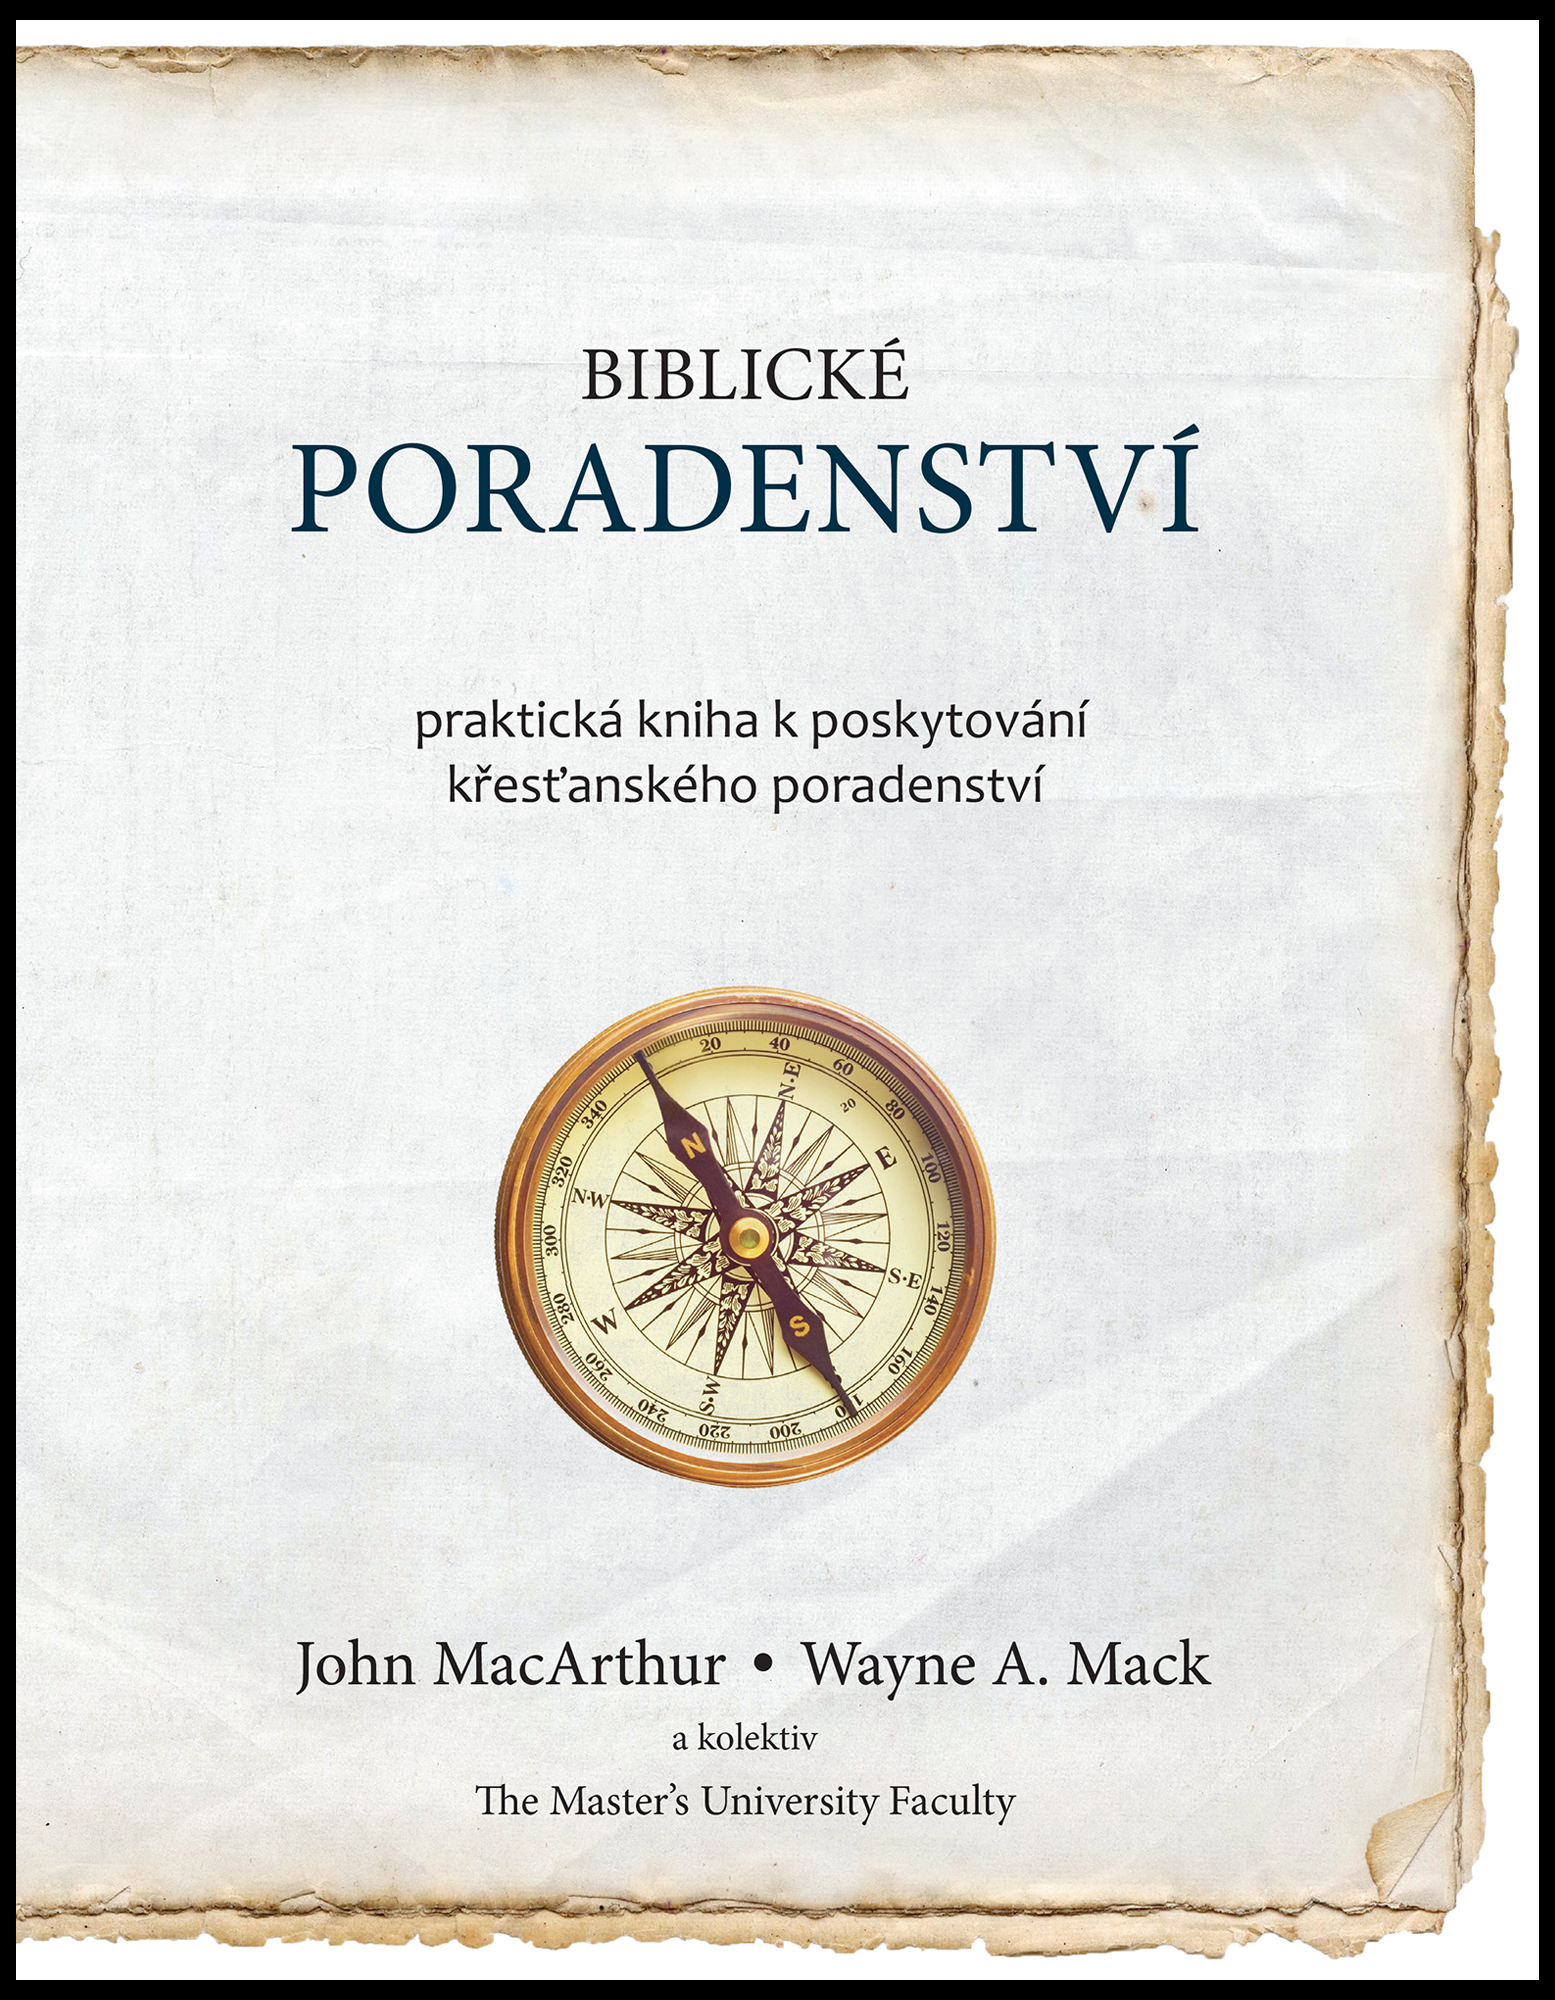 https://www.poutnikovacetba.cz/jini-vydavatele/biblicke-poradenstvi-john-macarthur-wayne-a-mack.html